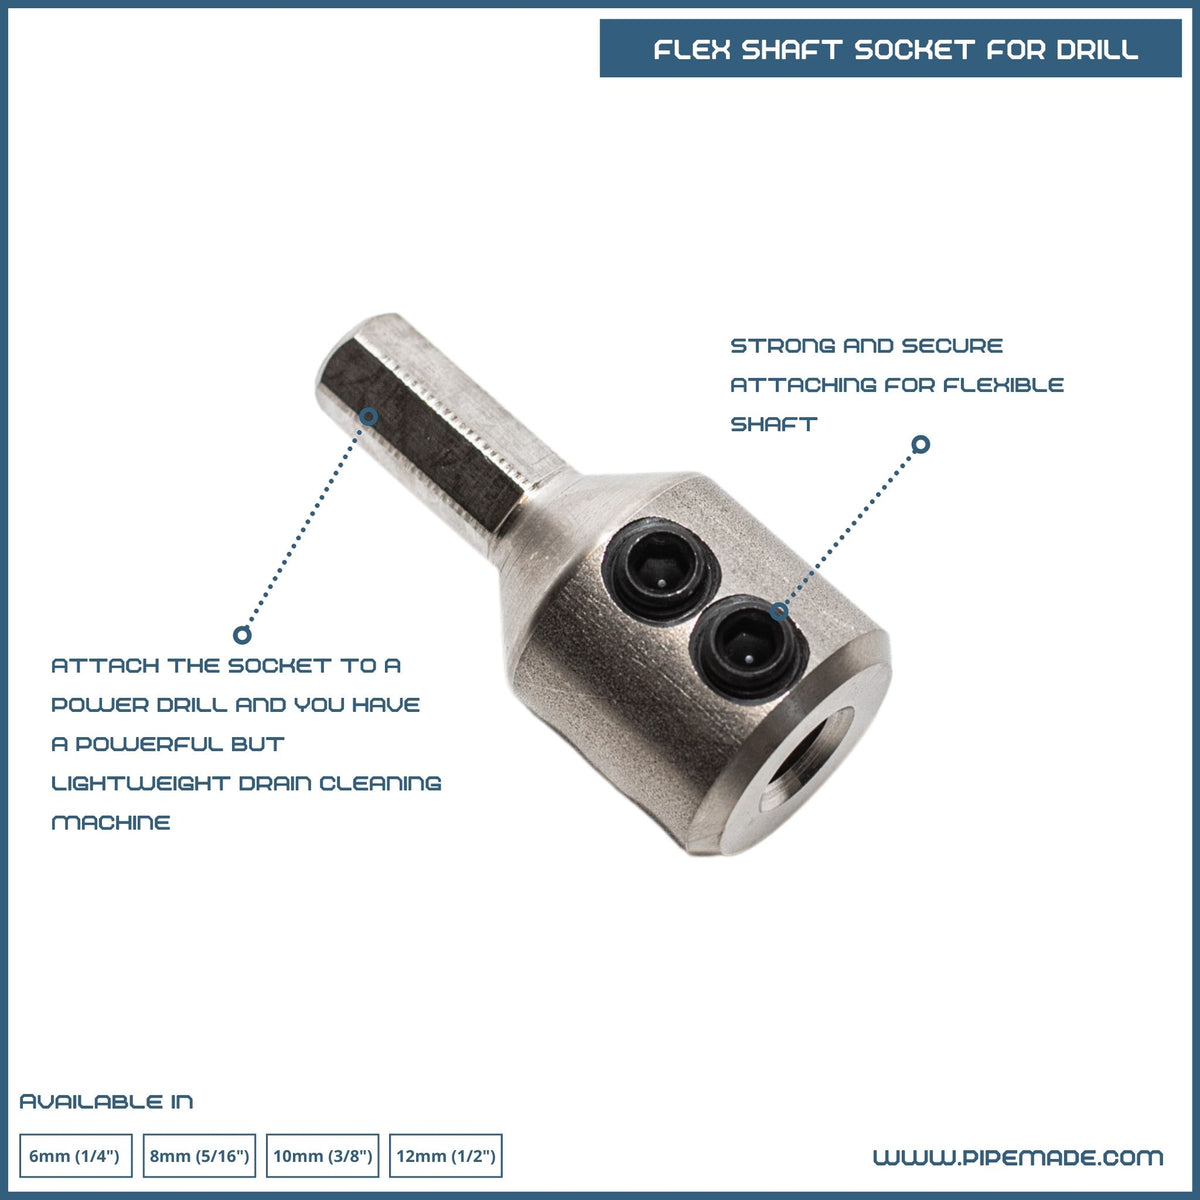 Standard Rotator Shaft Socket For Drill